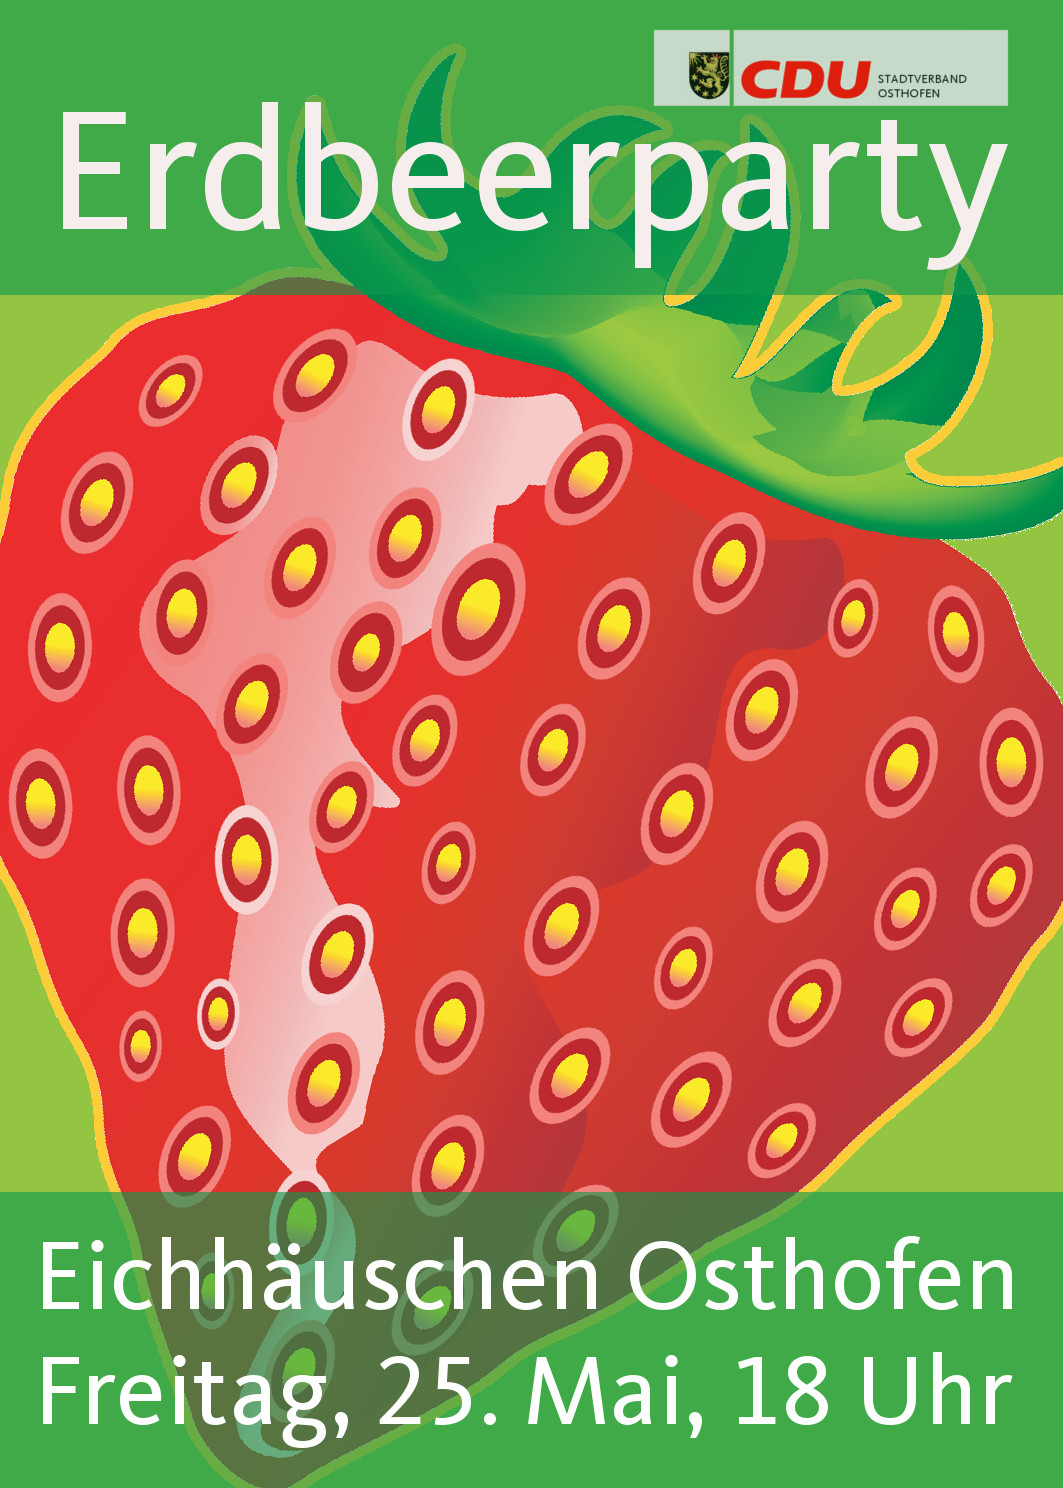 Erdbeerparty